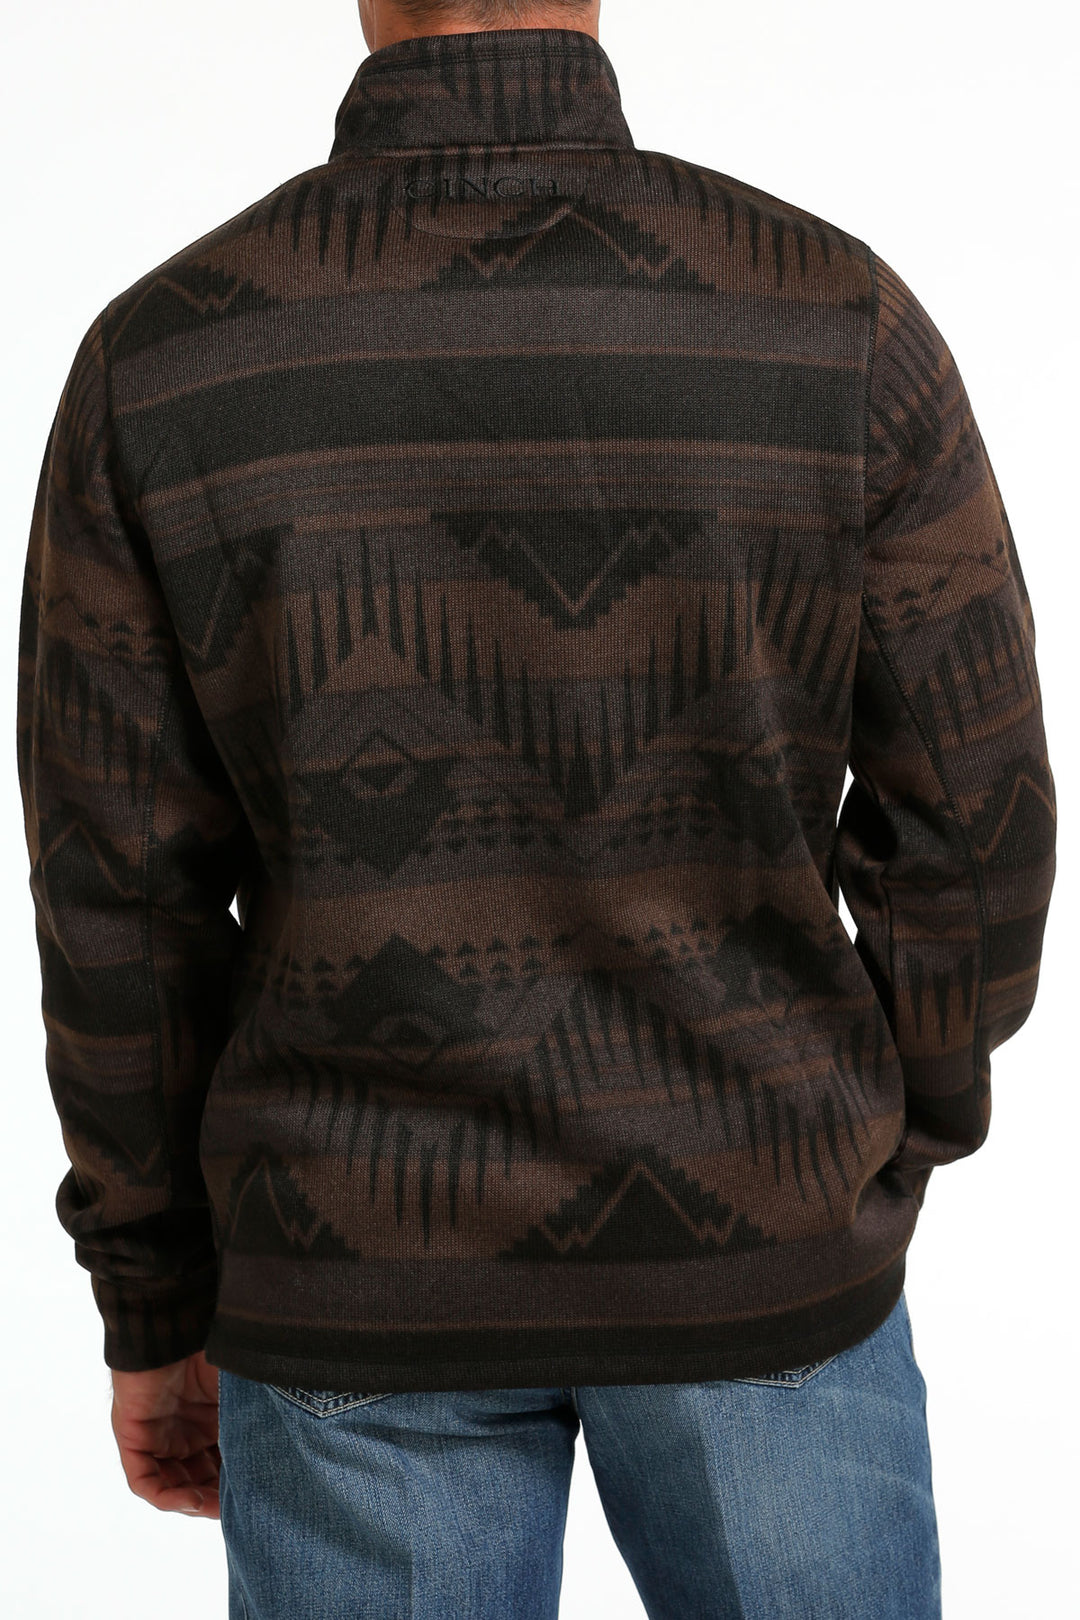 Cinch Men's Brown Half Zip Southwestern Sweater Pullover